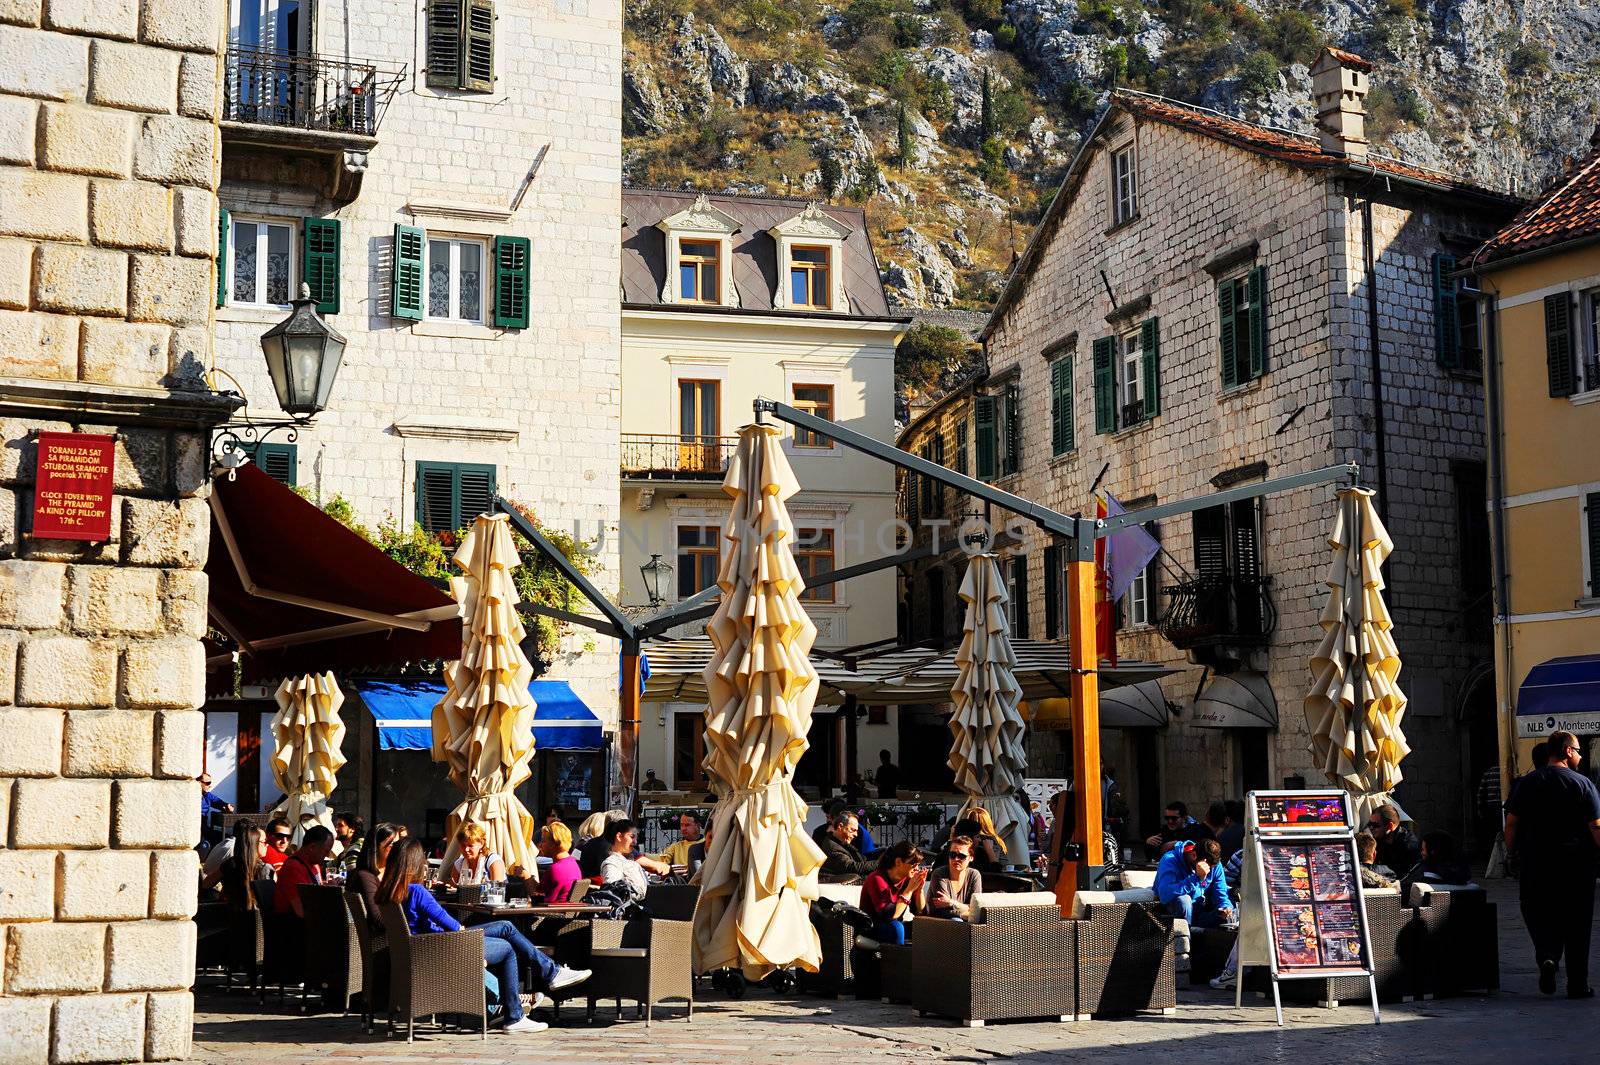  Street cafe in Kotor by joyfull